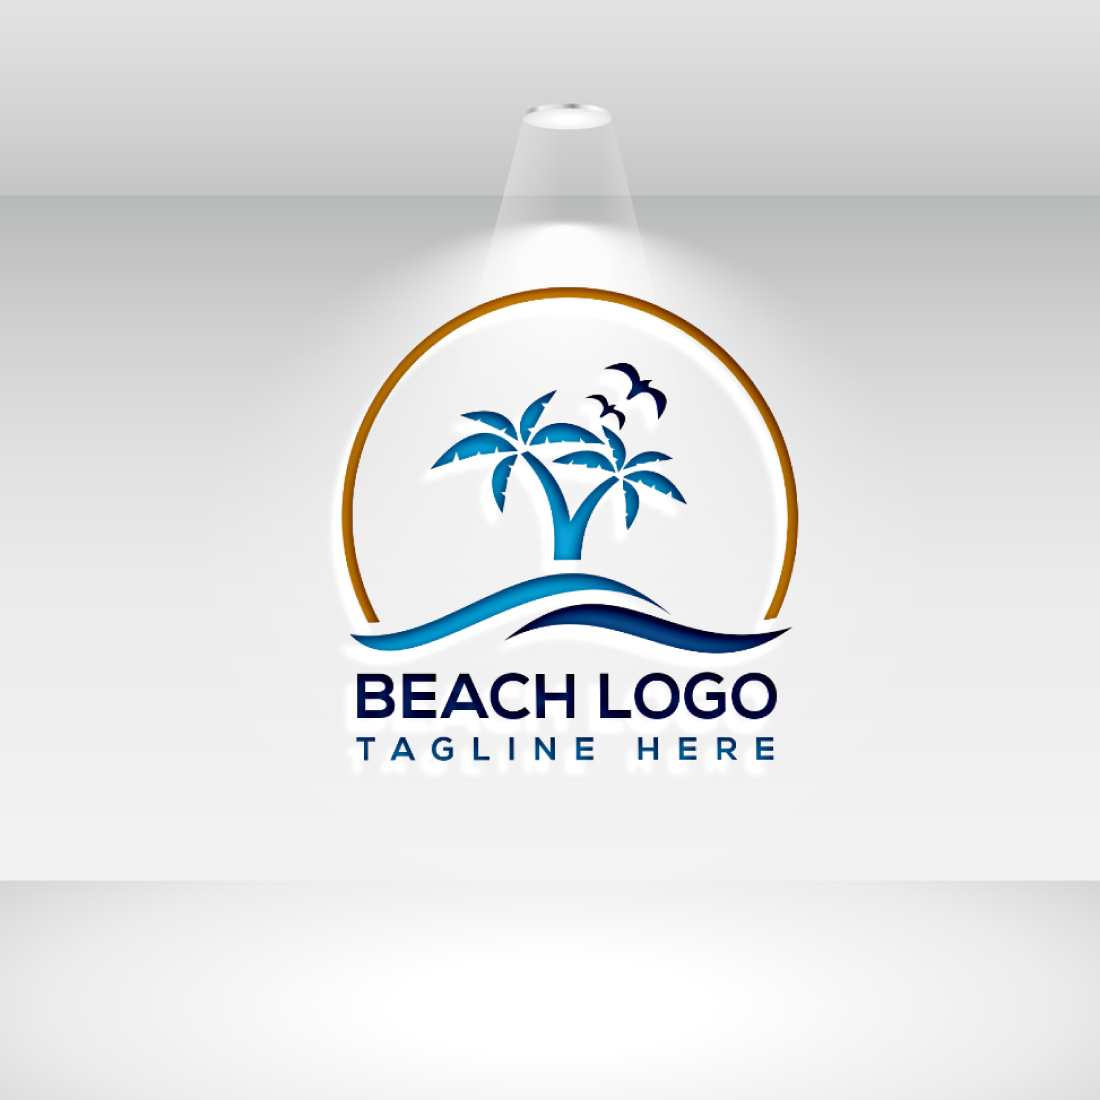 Unique Beach Logo Vector Graphics cover image.